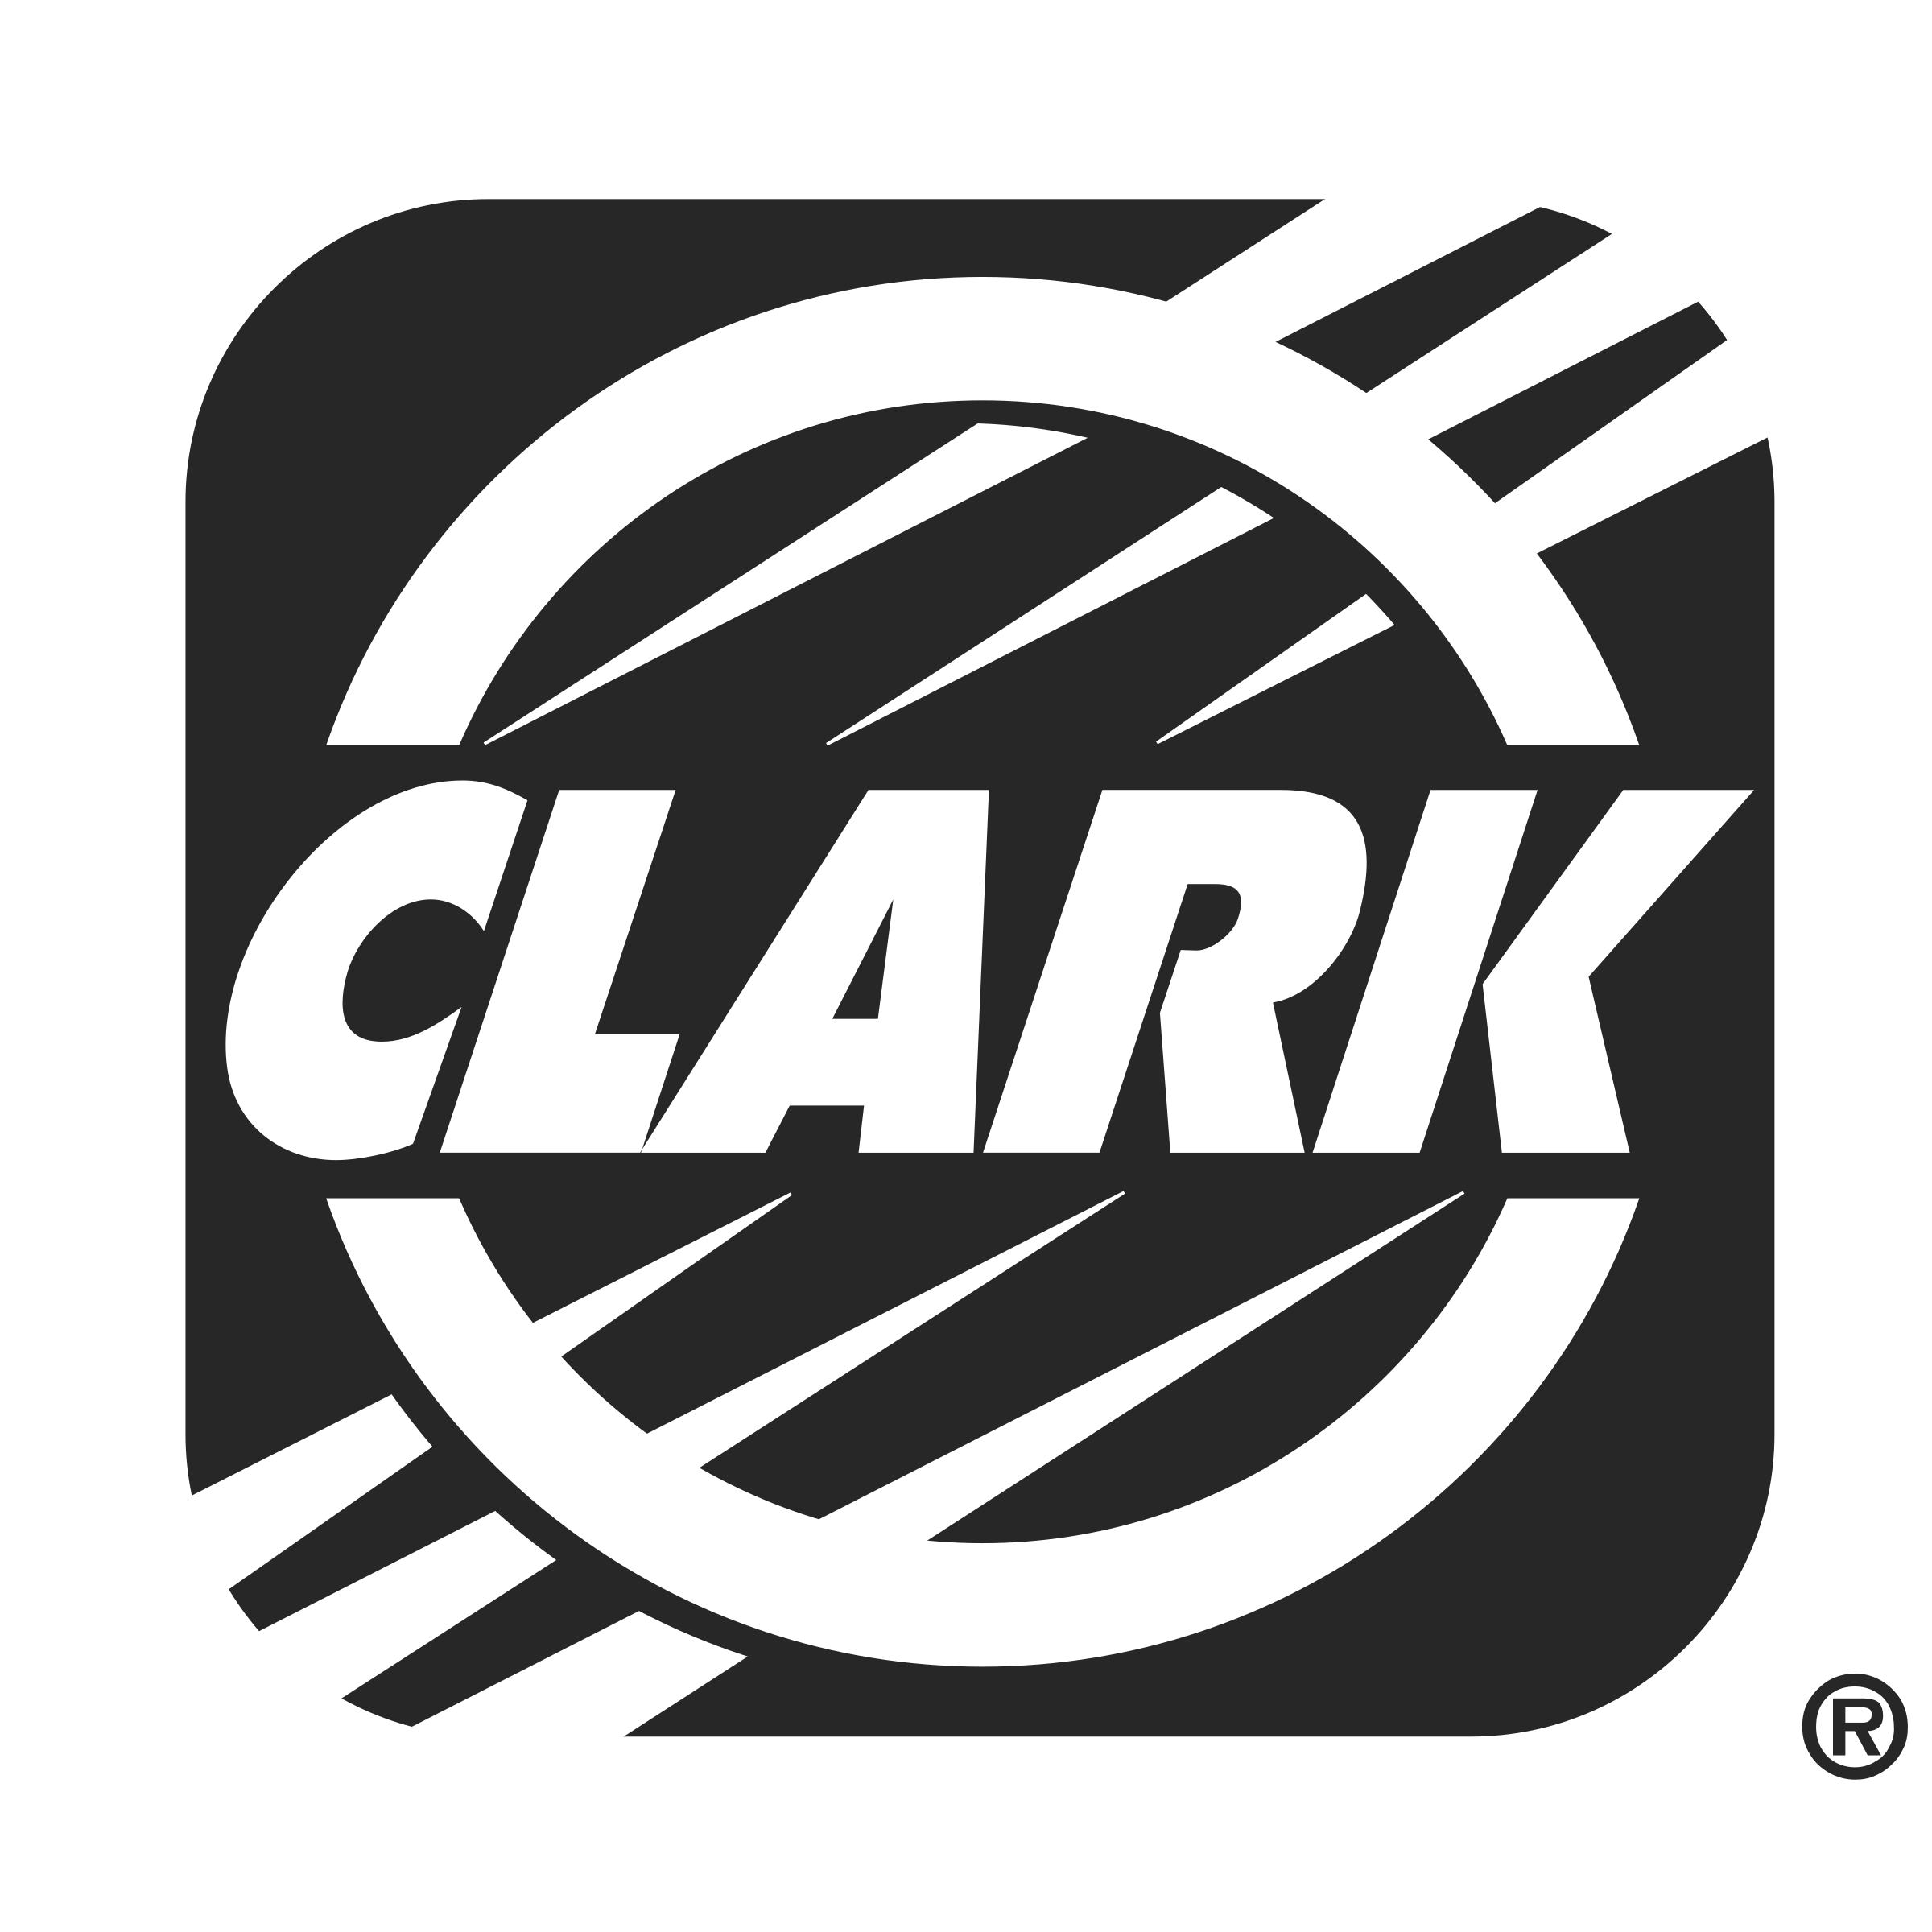 Clark Logo - Clark Retail Logo PNG Transparent & SVG Vector - Freebie Supply